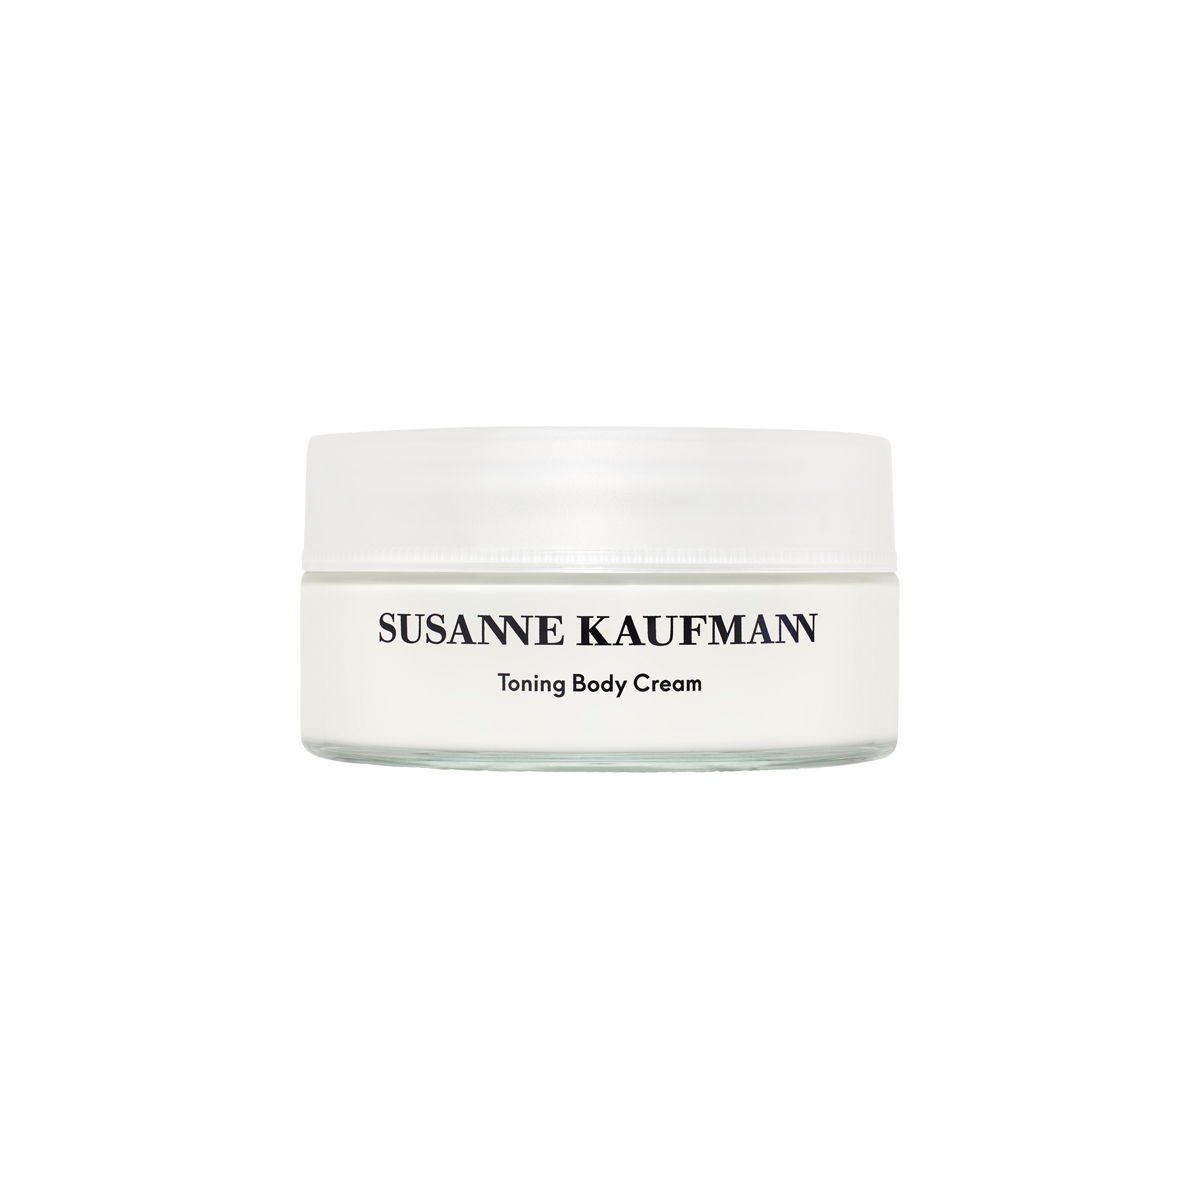 Susanne Kaufmann - Toning Body Cream